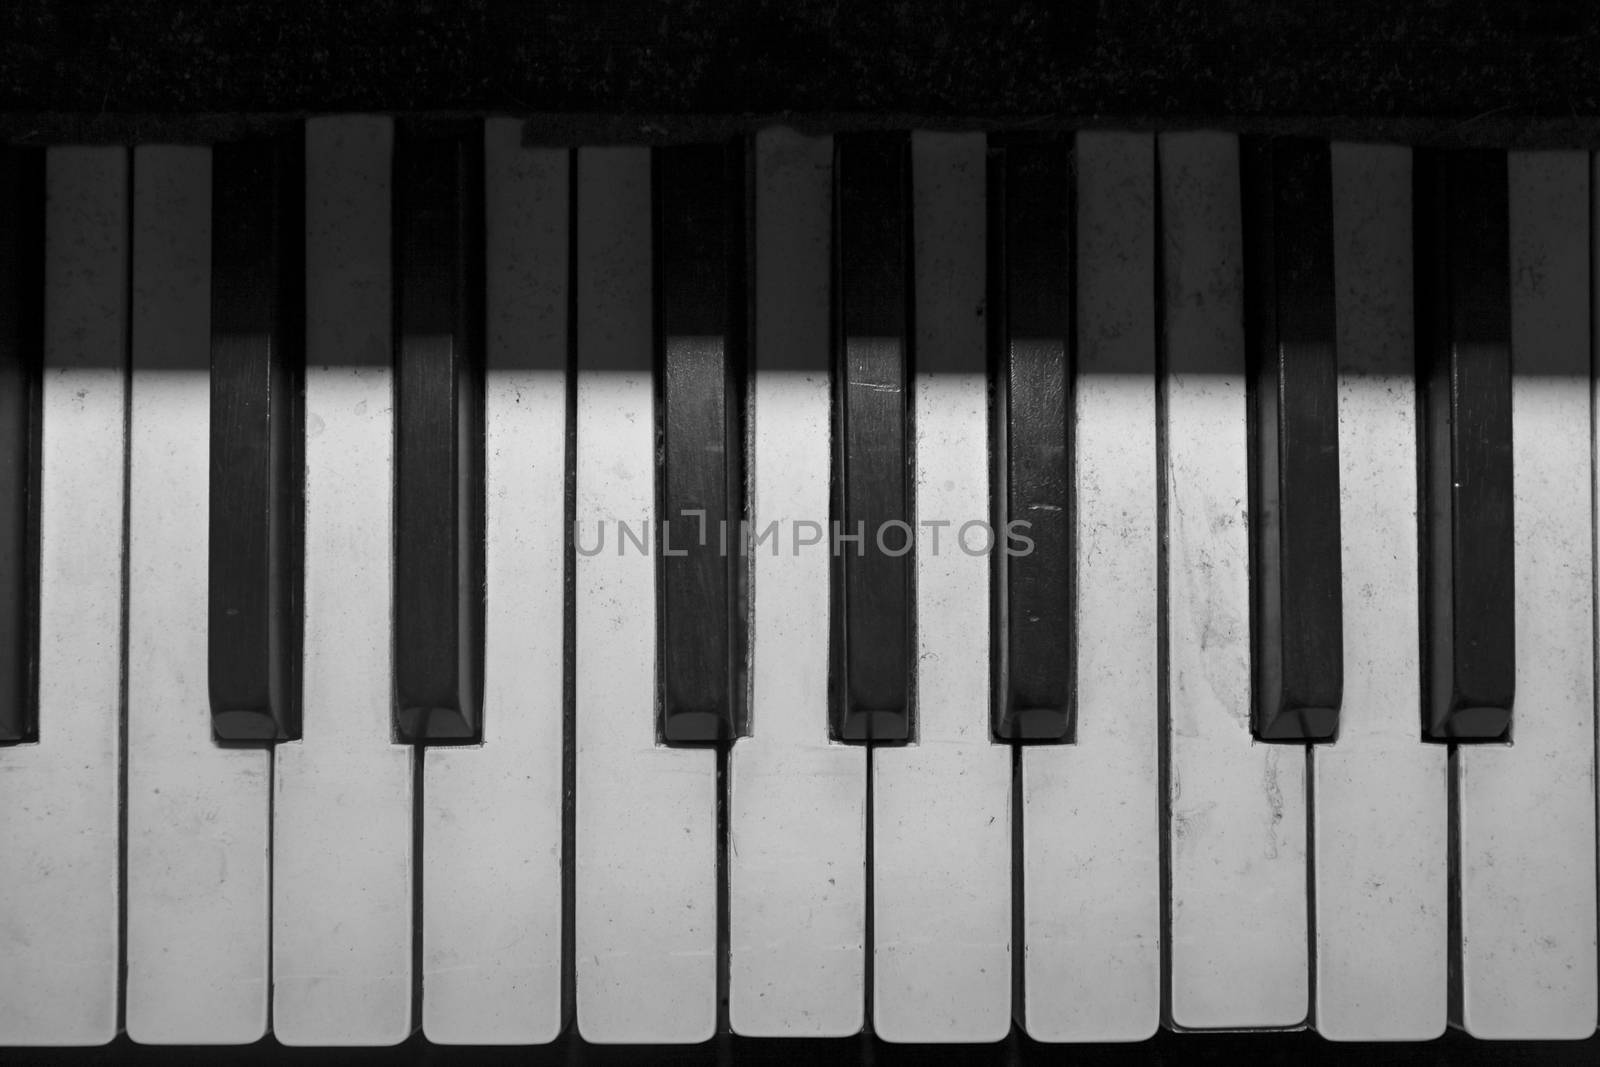 Detail shot of an old piano's keyboard keys